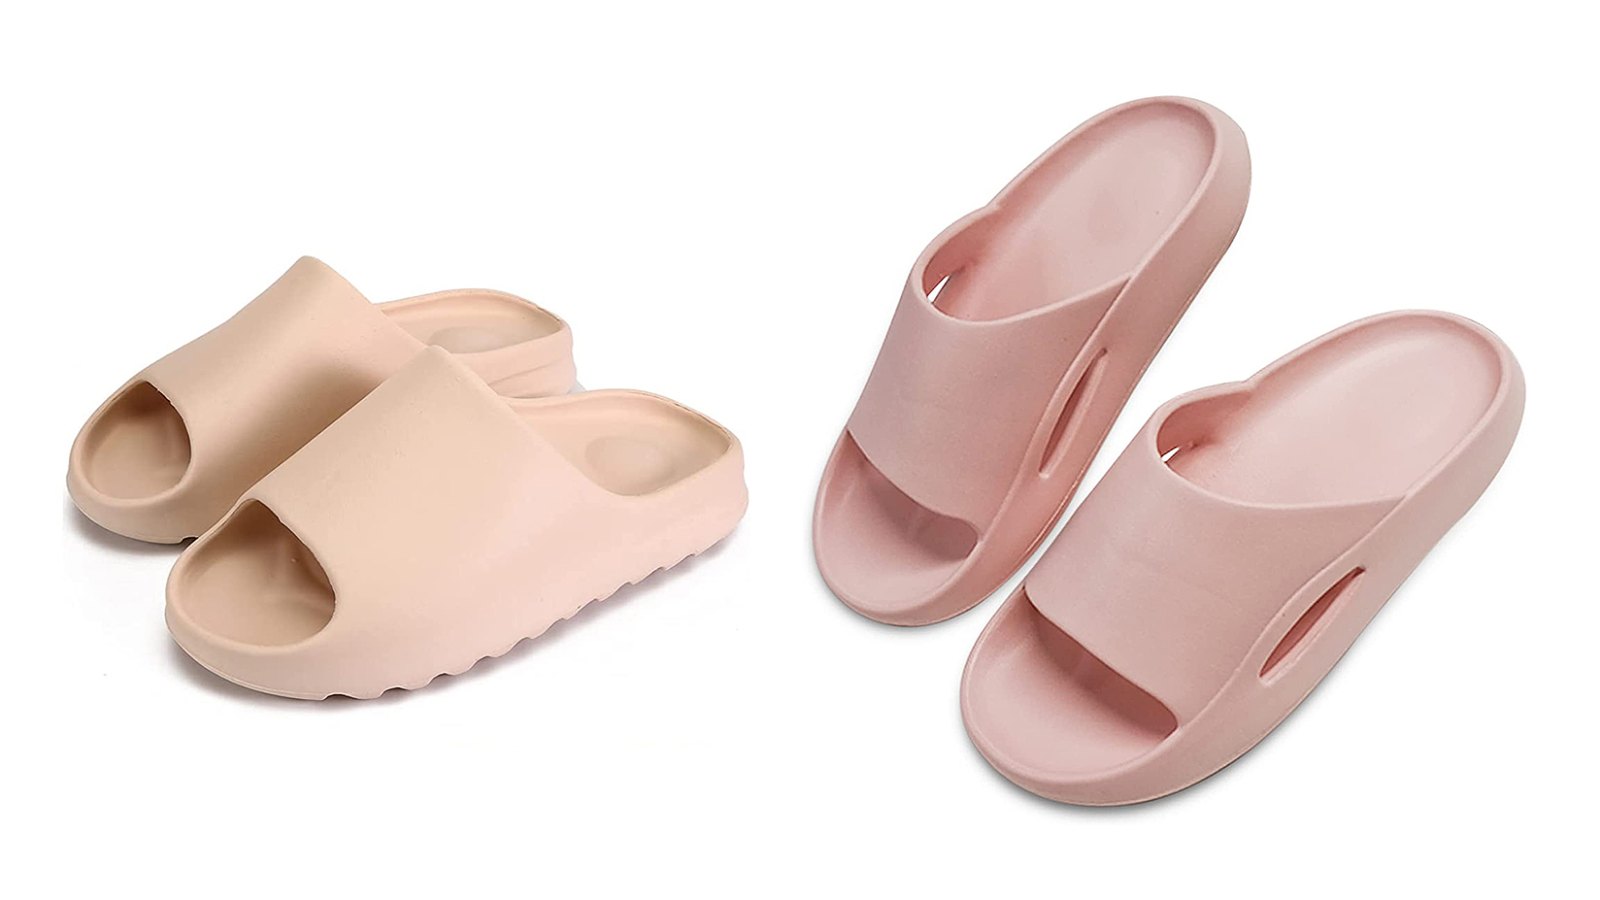 yeezy-style-slide-sandals-alternatives